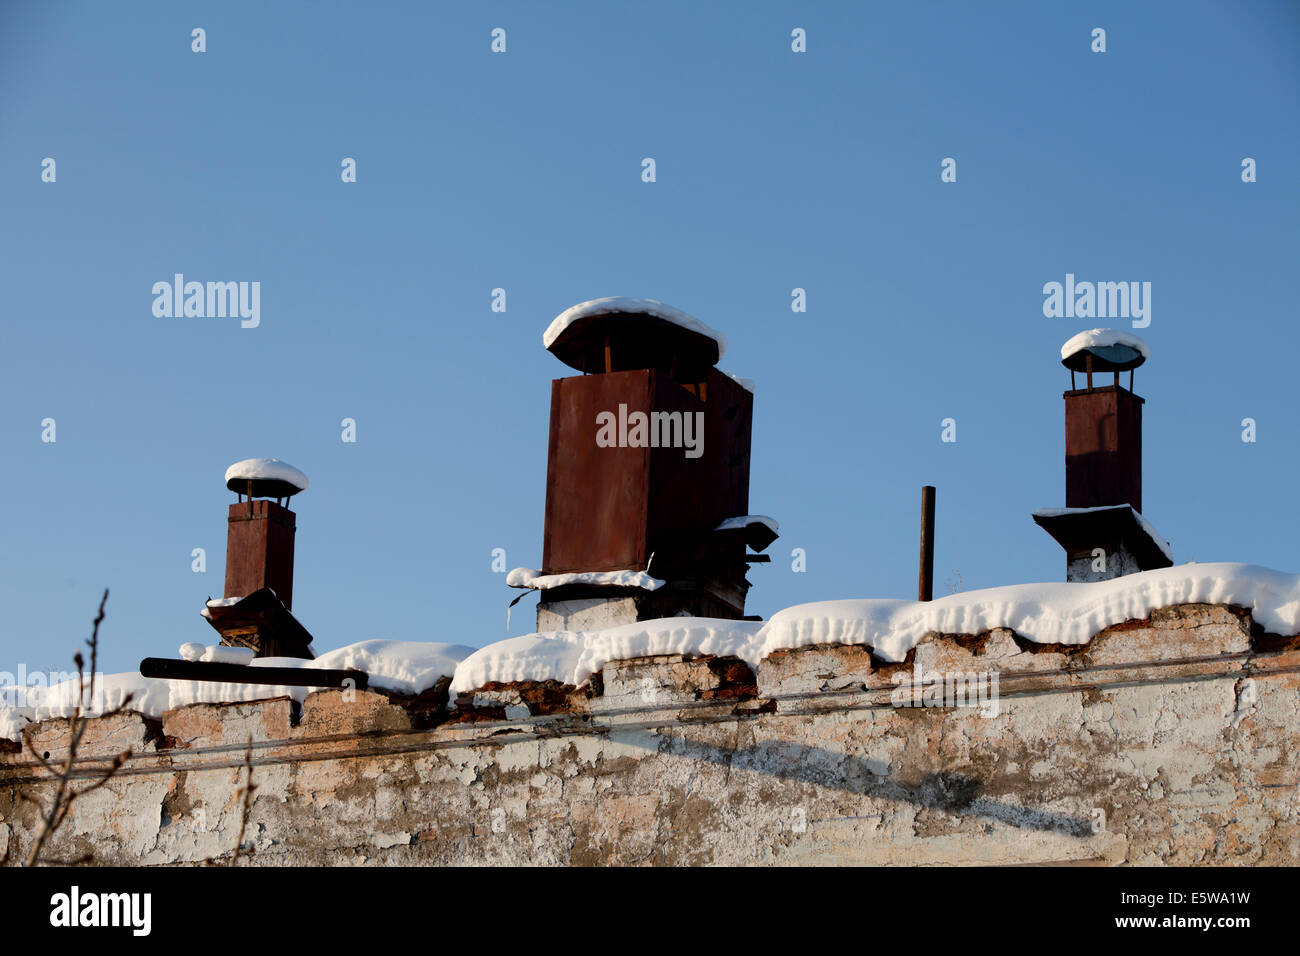 Coperta di neve rusty comignoli industrial Foto Stock